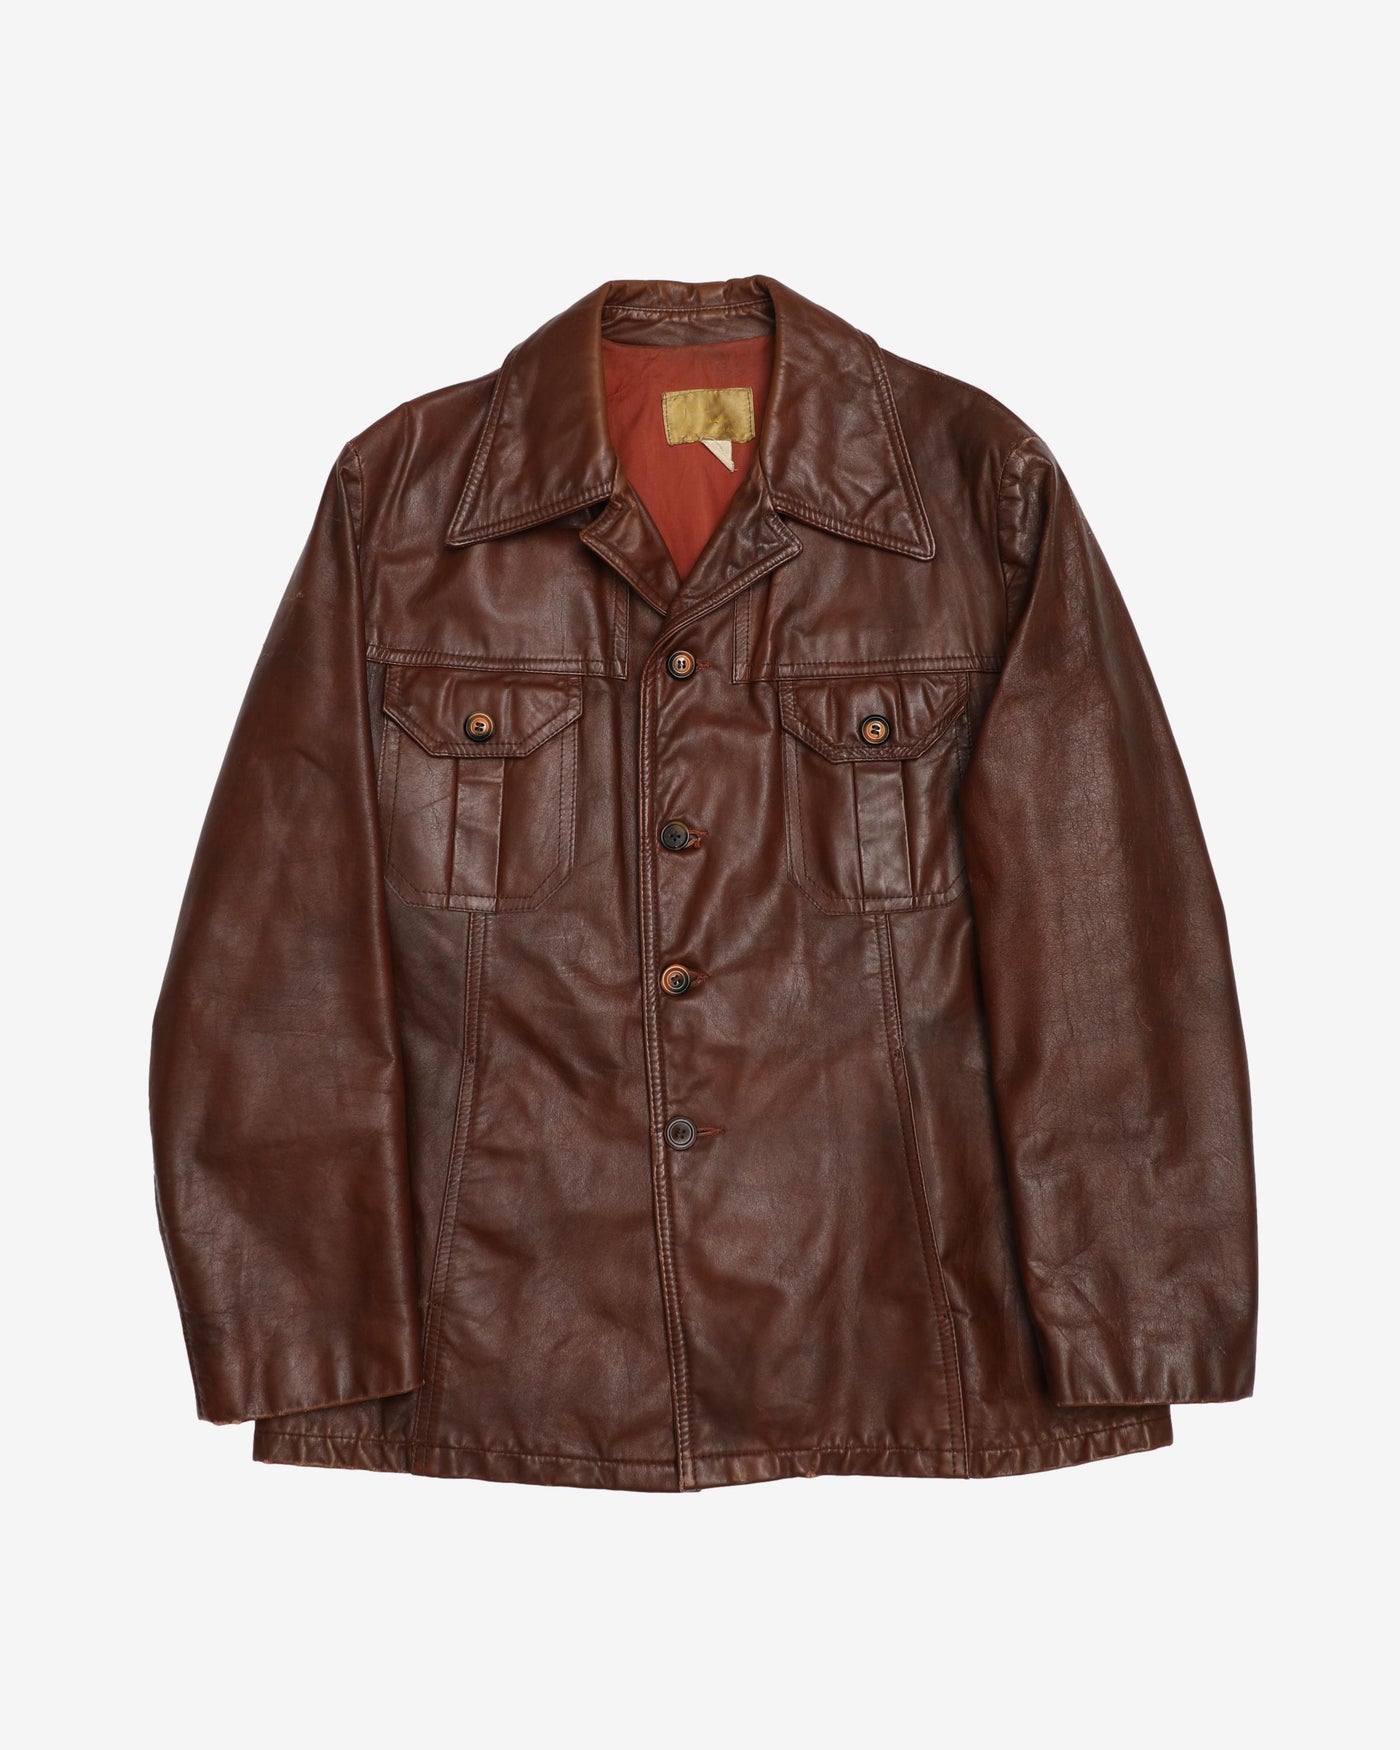 Vintage 70s Sears Brown Leather Jacket - L